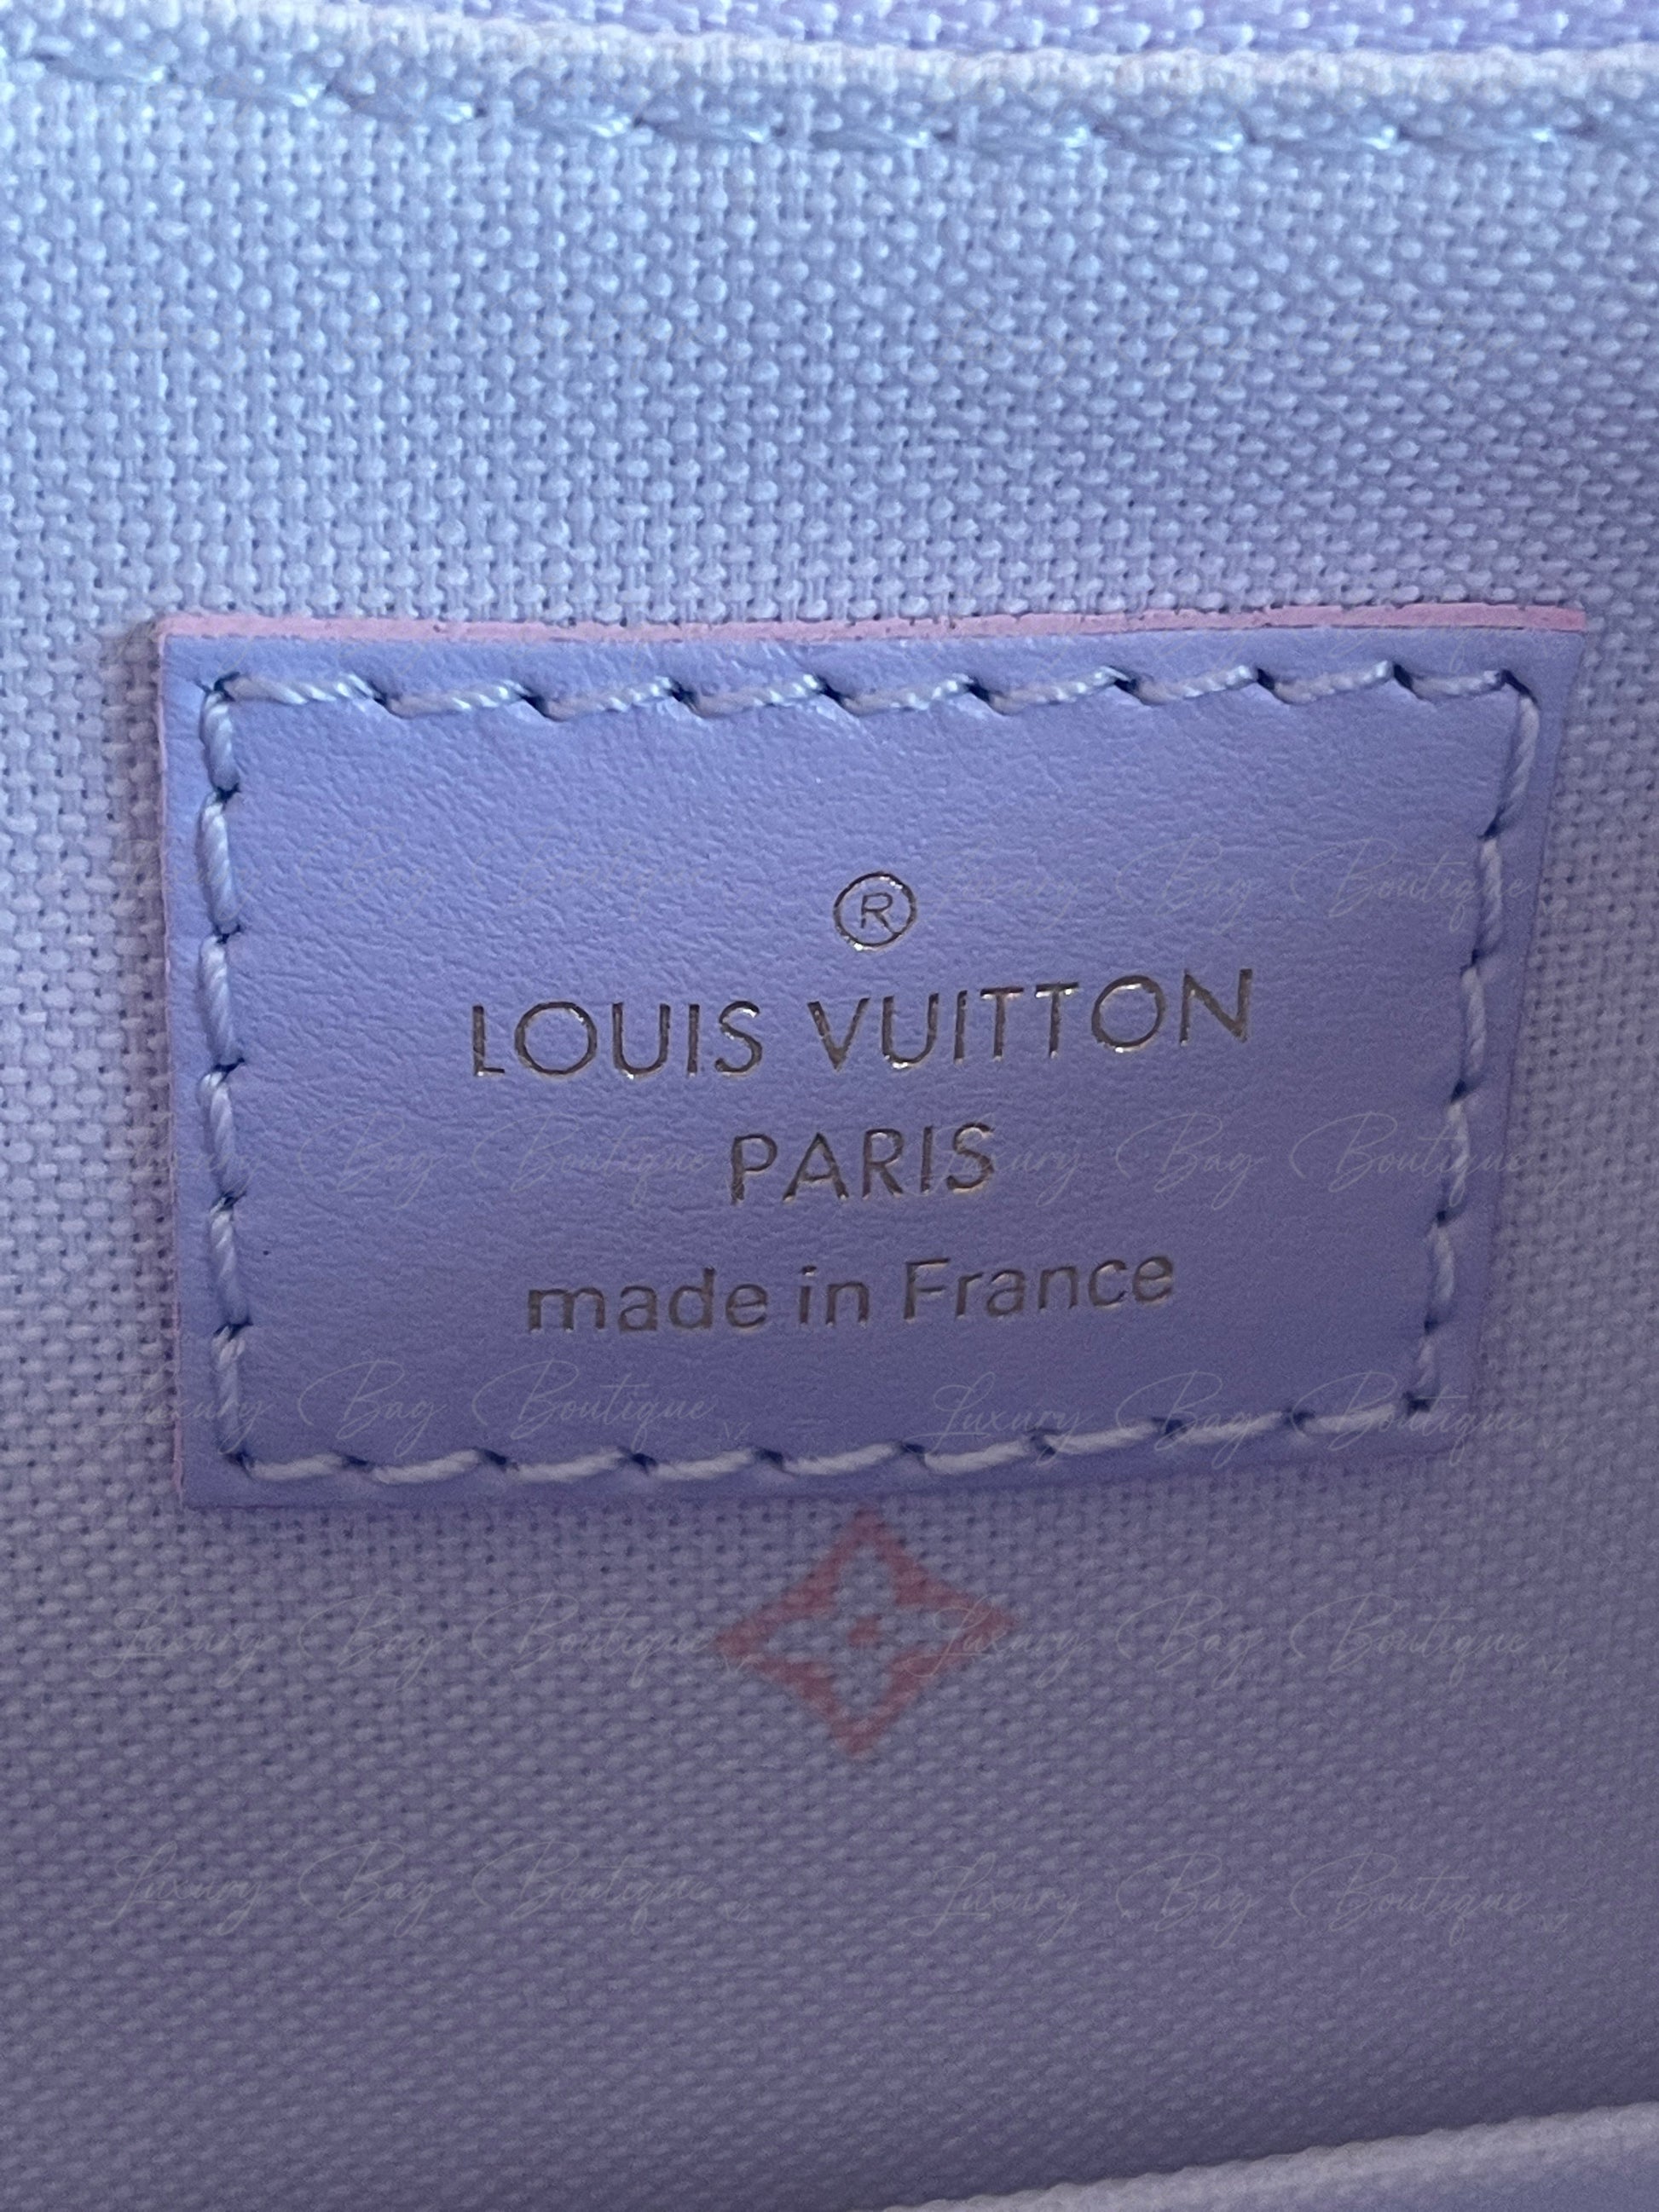 2022 Louis Vuitton Marshmallow sunrise pastel - SOLD OUT HARD